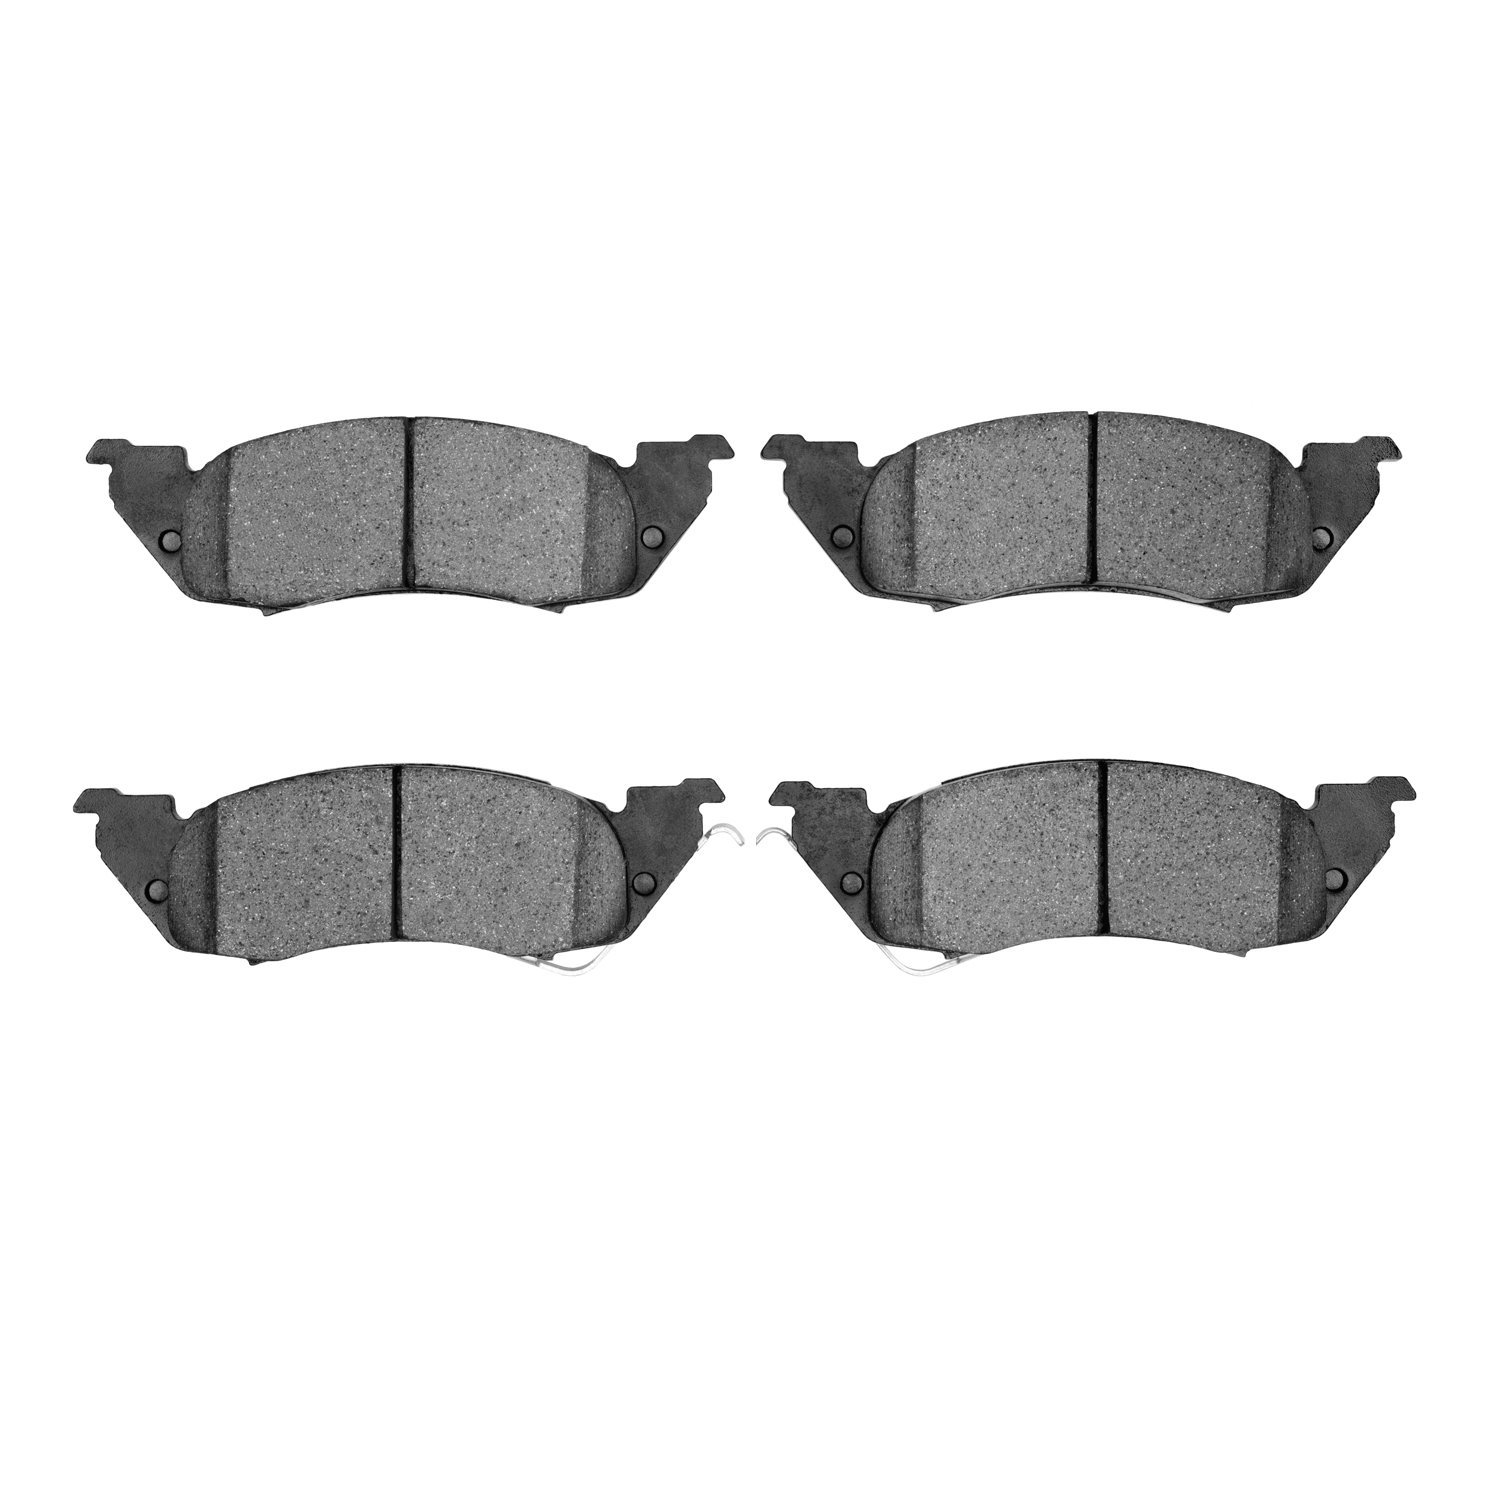 1310-0529-00 3000-Series Ceramic Brake Pads, 1991-1998 Mopar, Position: Front